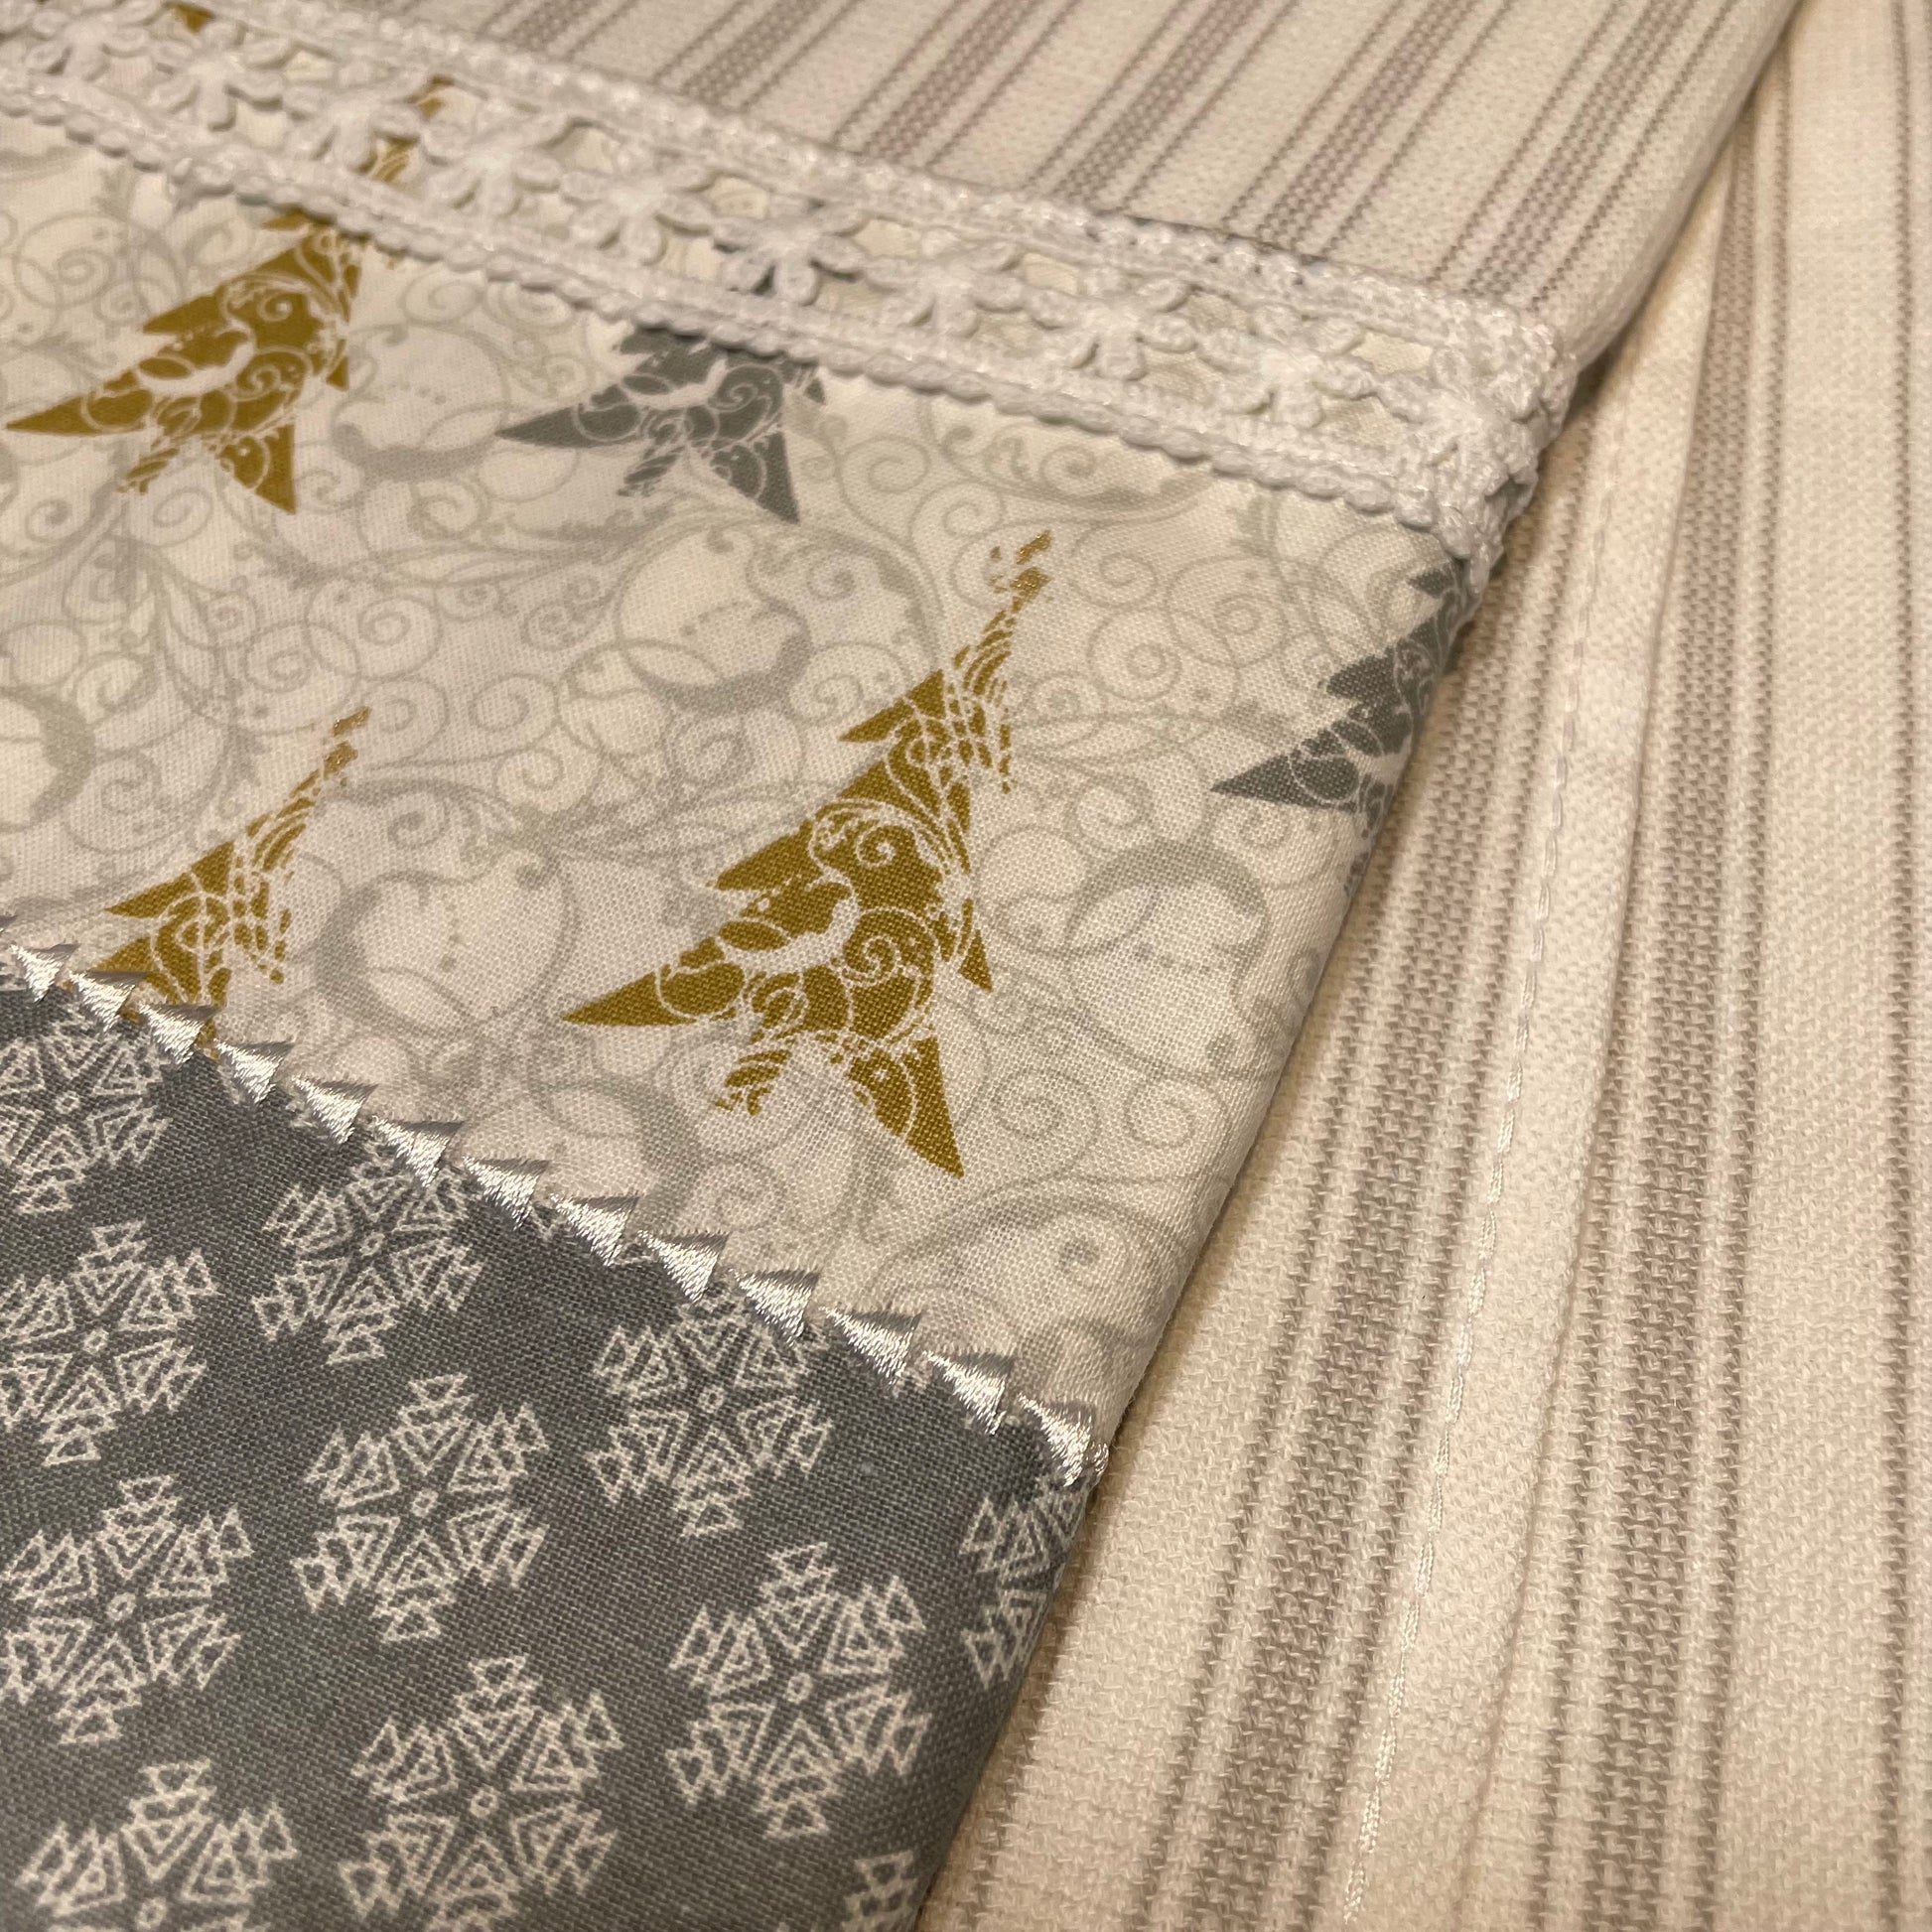 Christmas Tea Towel, White and Grey Decorative Christmas Dish Towel - Home Stitchery Decor